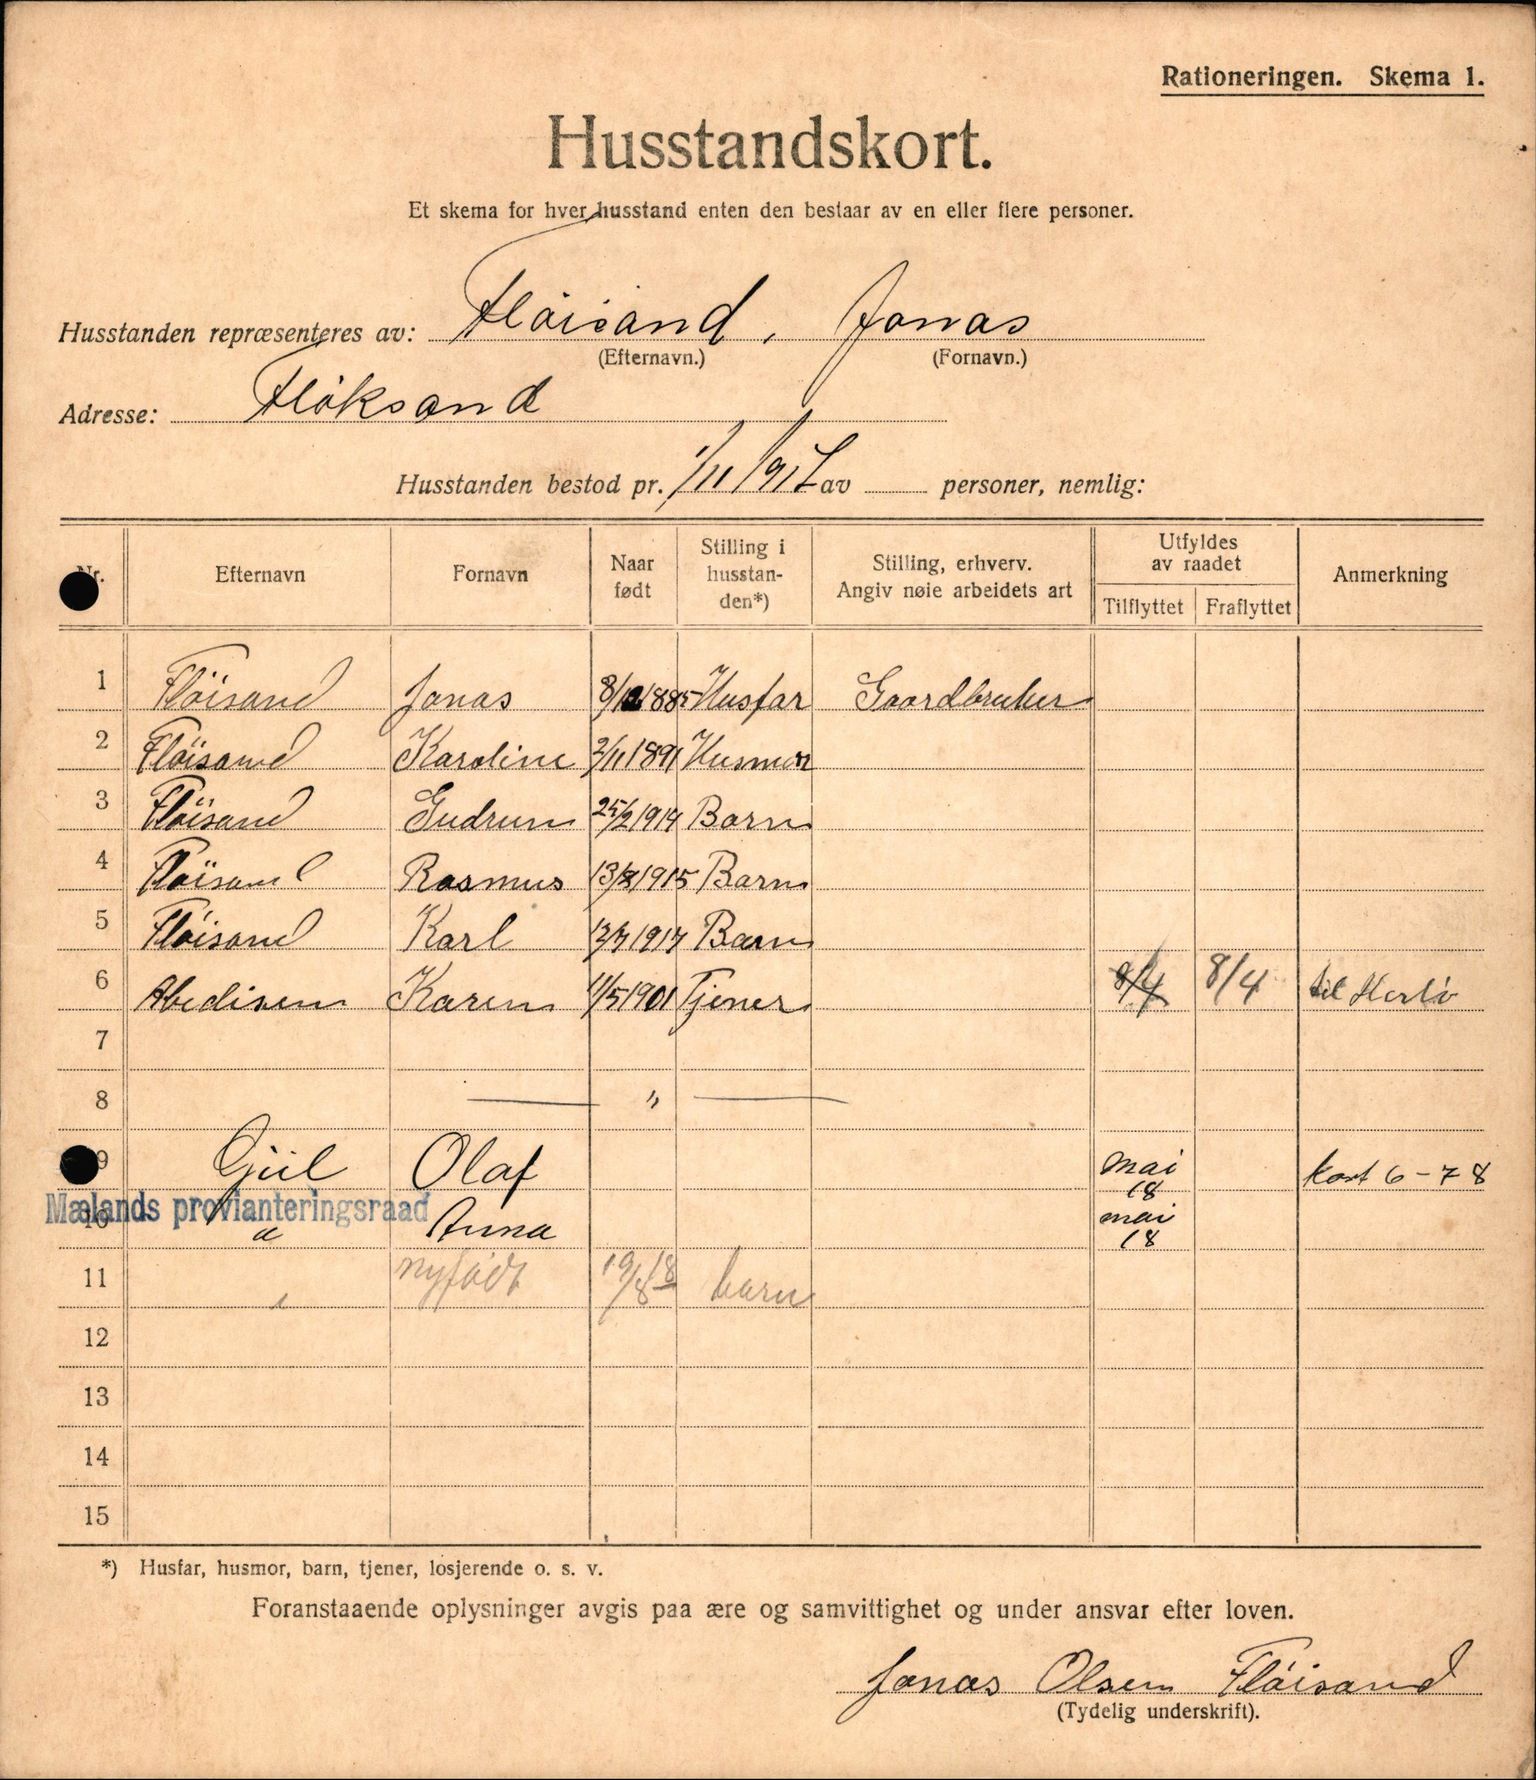 IKAH, Meland kommune, Provianteringsrådet, Husstander per 01.11.1917, 1917-1918, s. 49